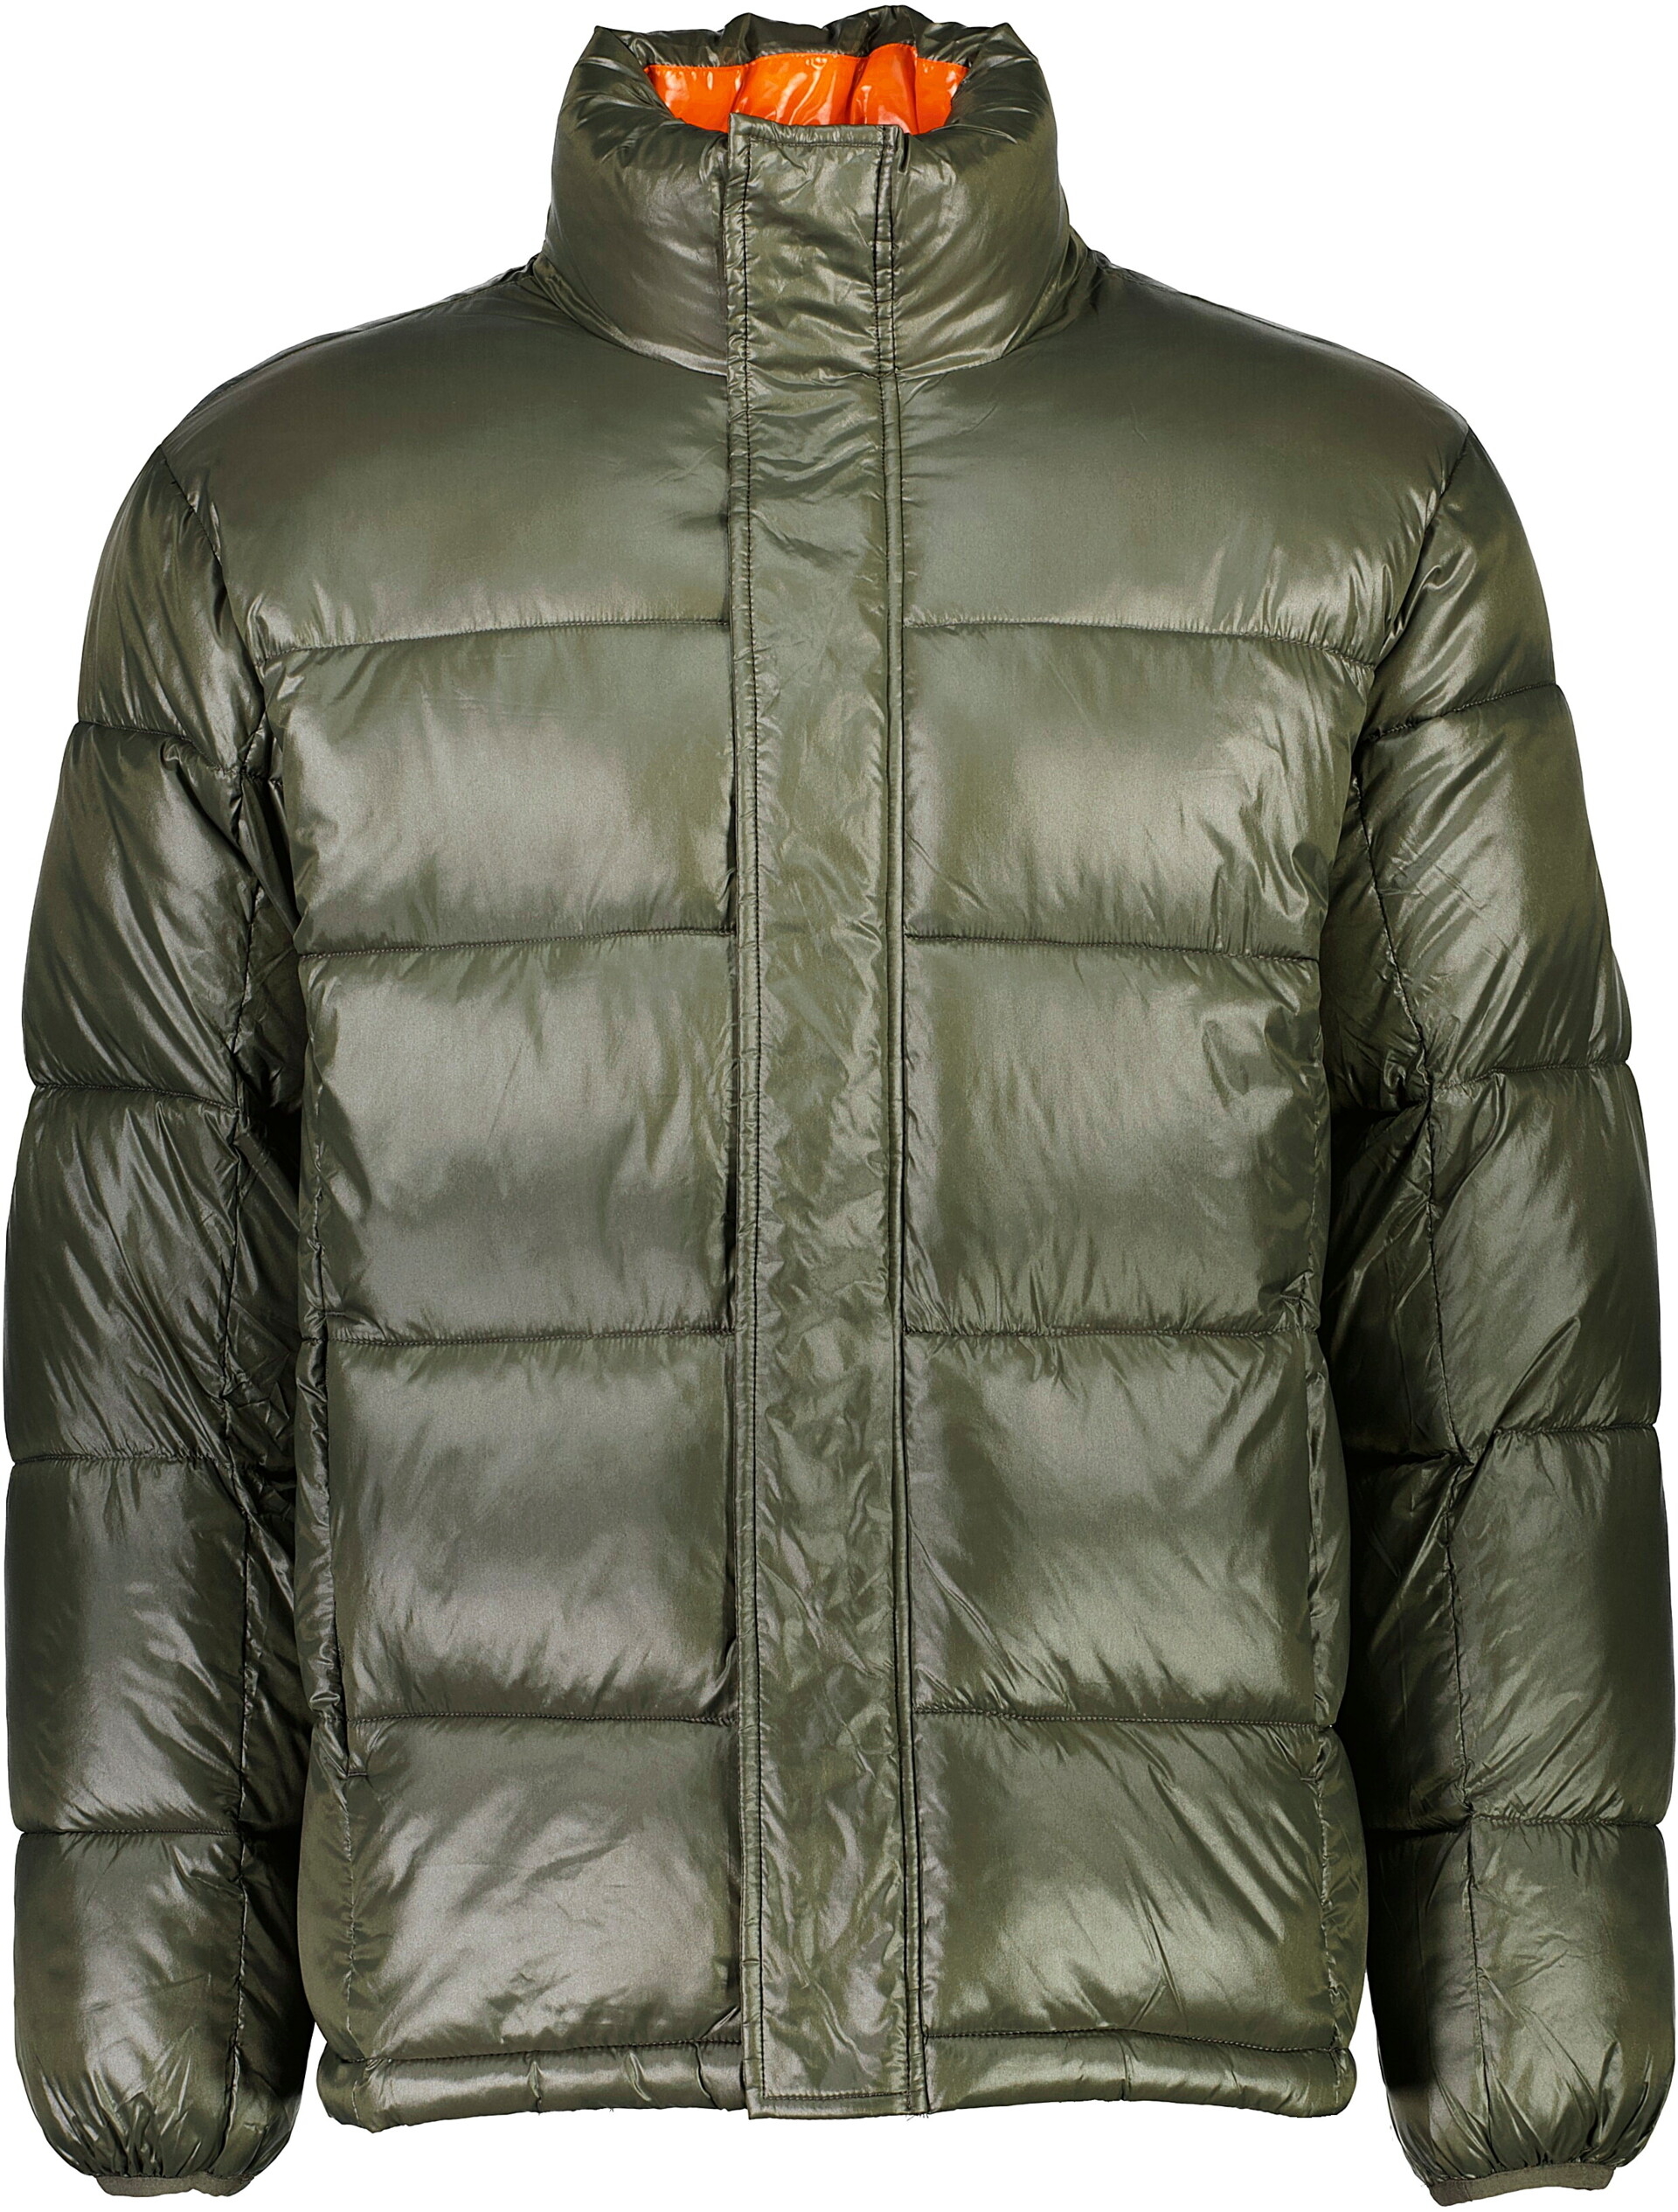 Lindbergh Padded jacket green / army